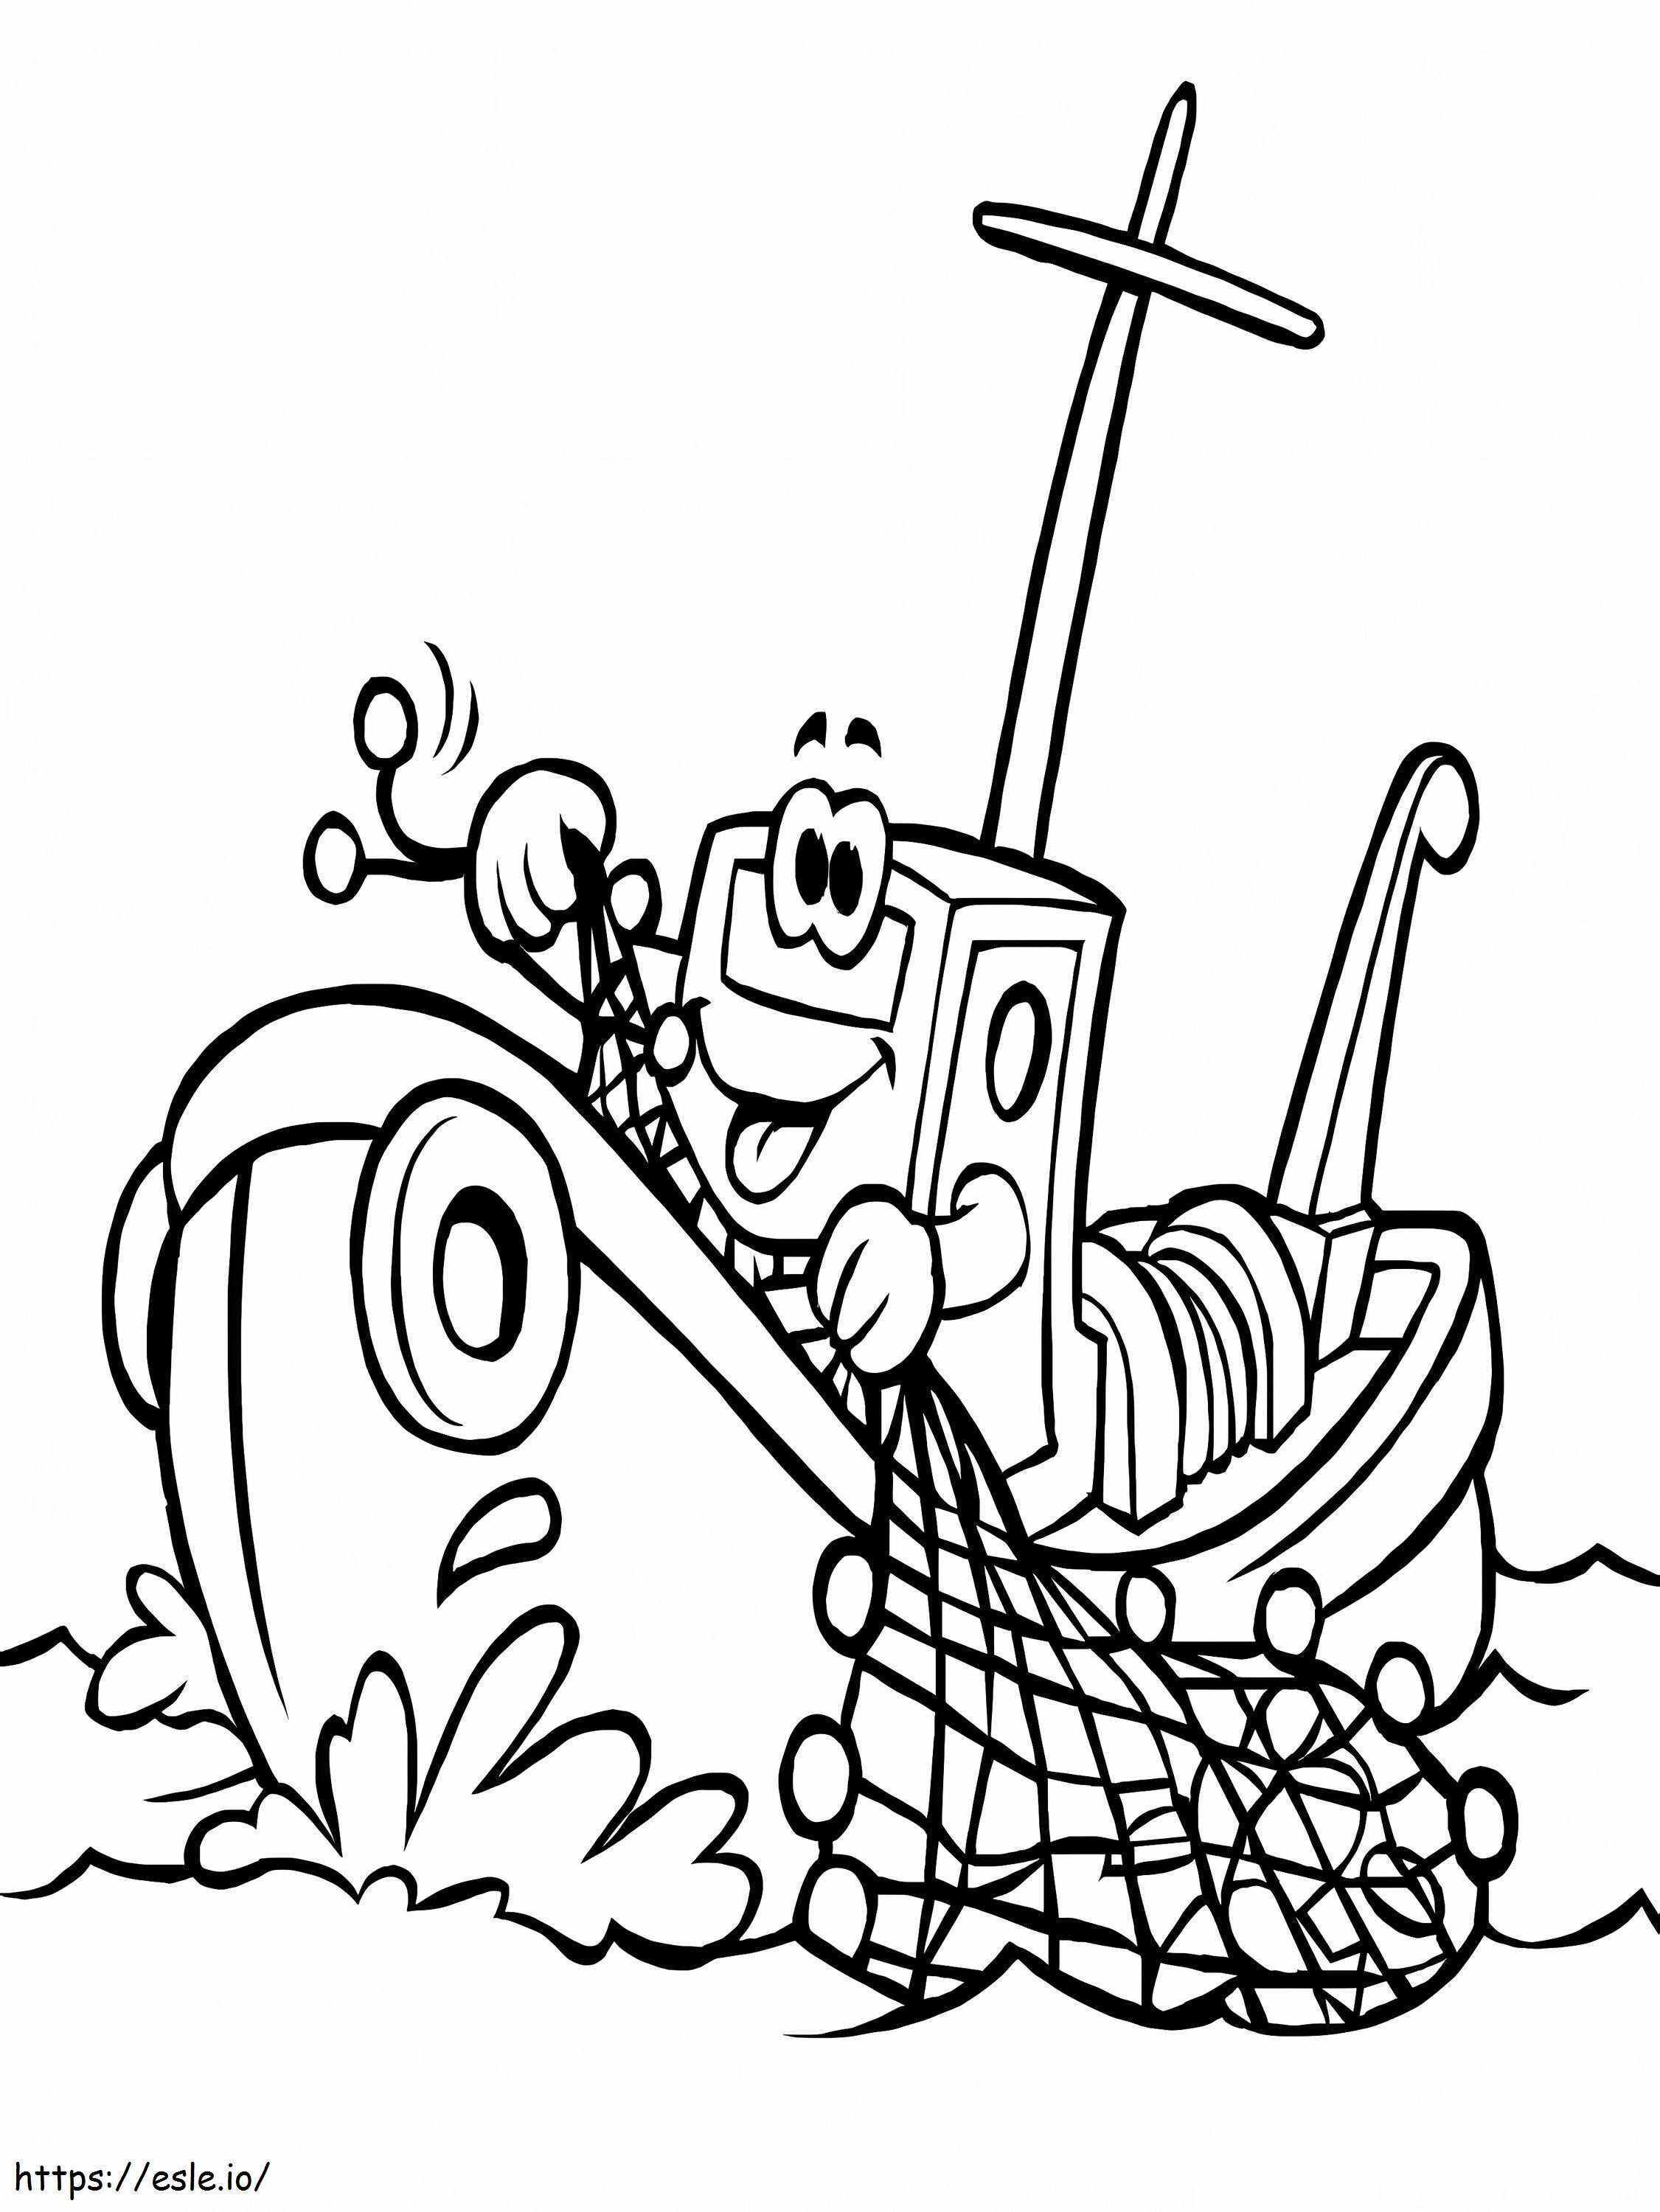 Cartoon-Fischerboot ausmalbilder